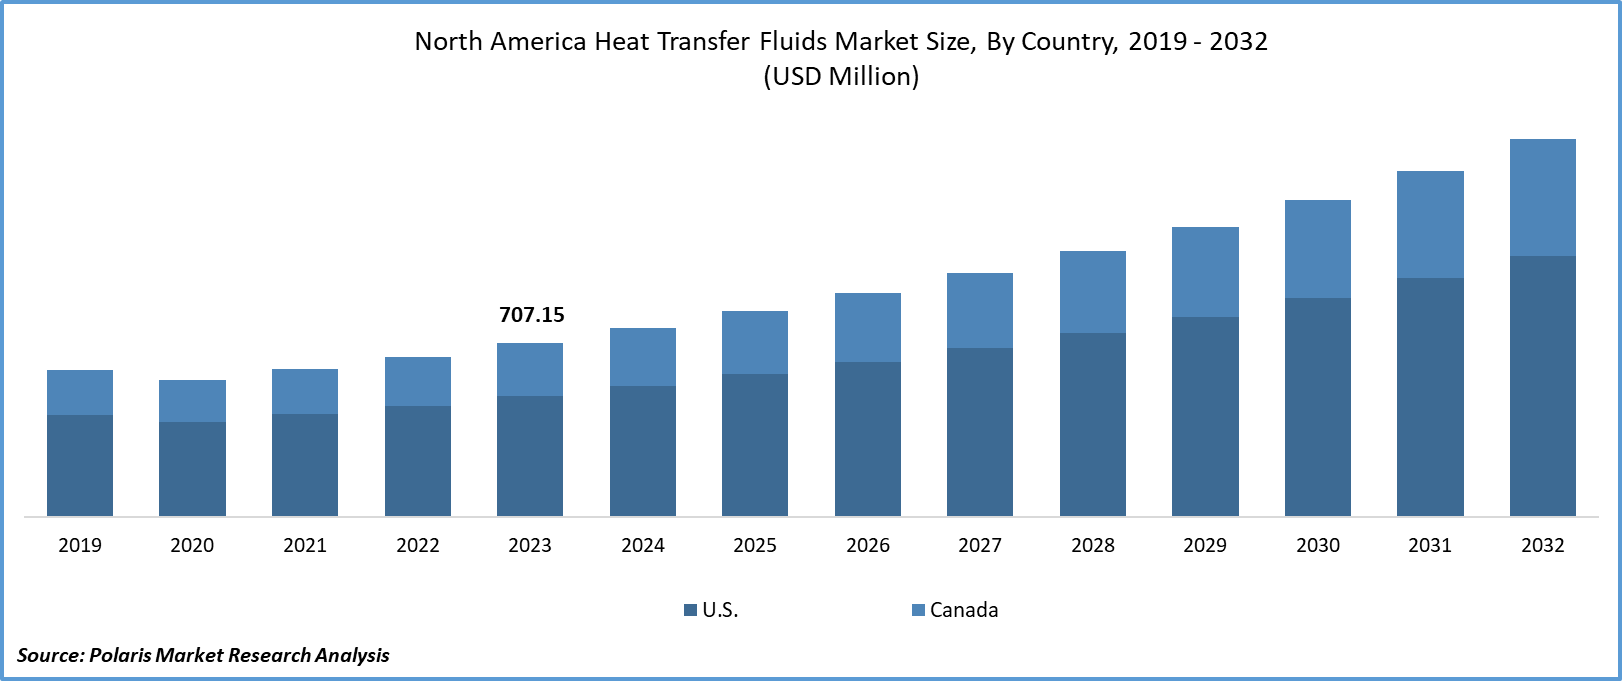 North America Heat Transfer Fluids Market Size